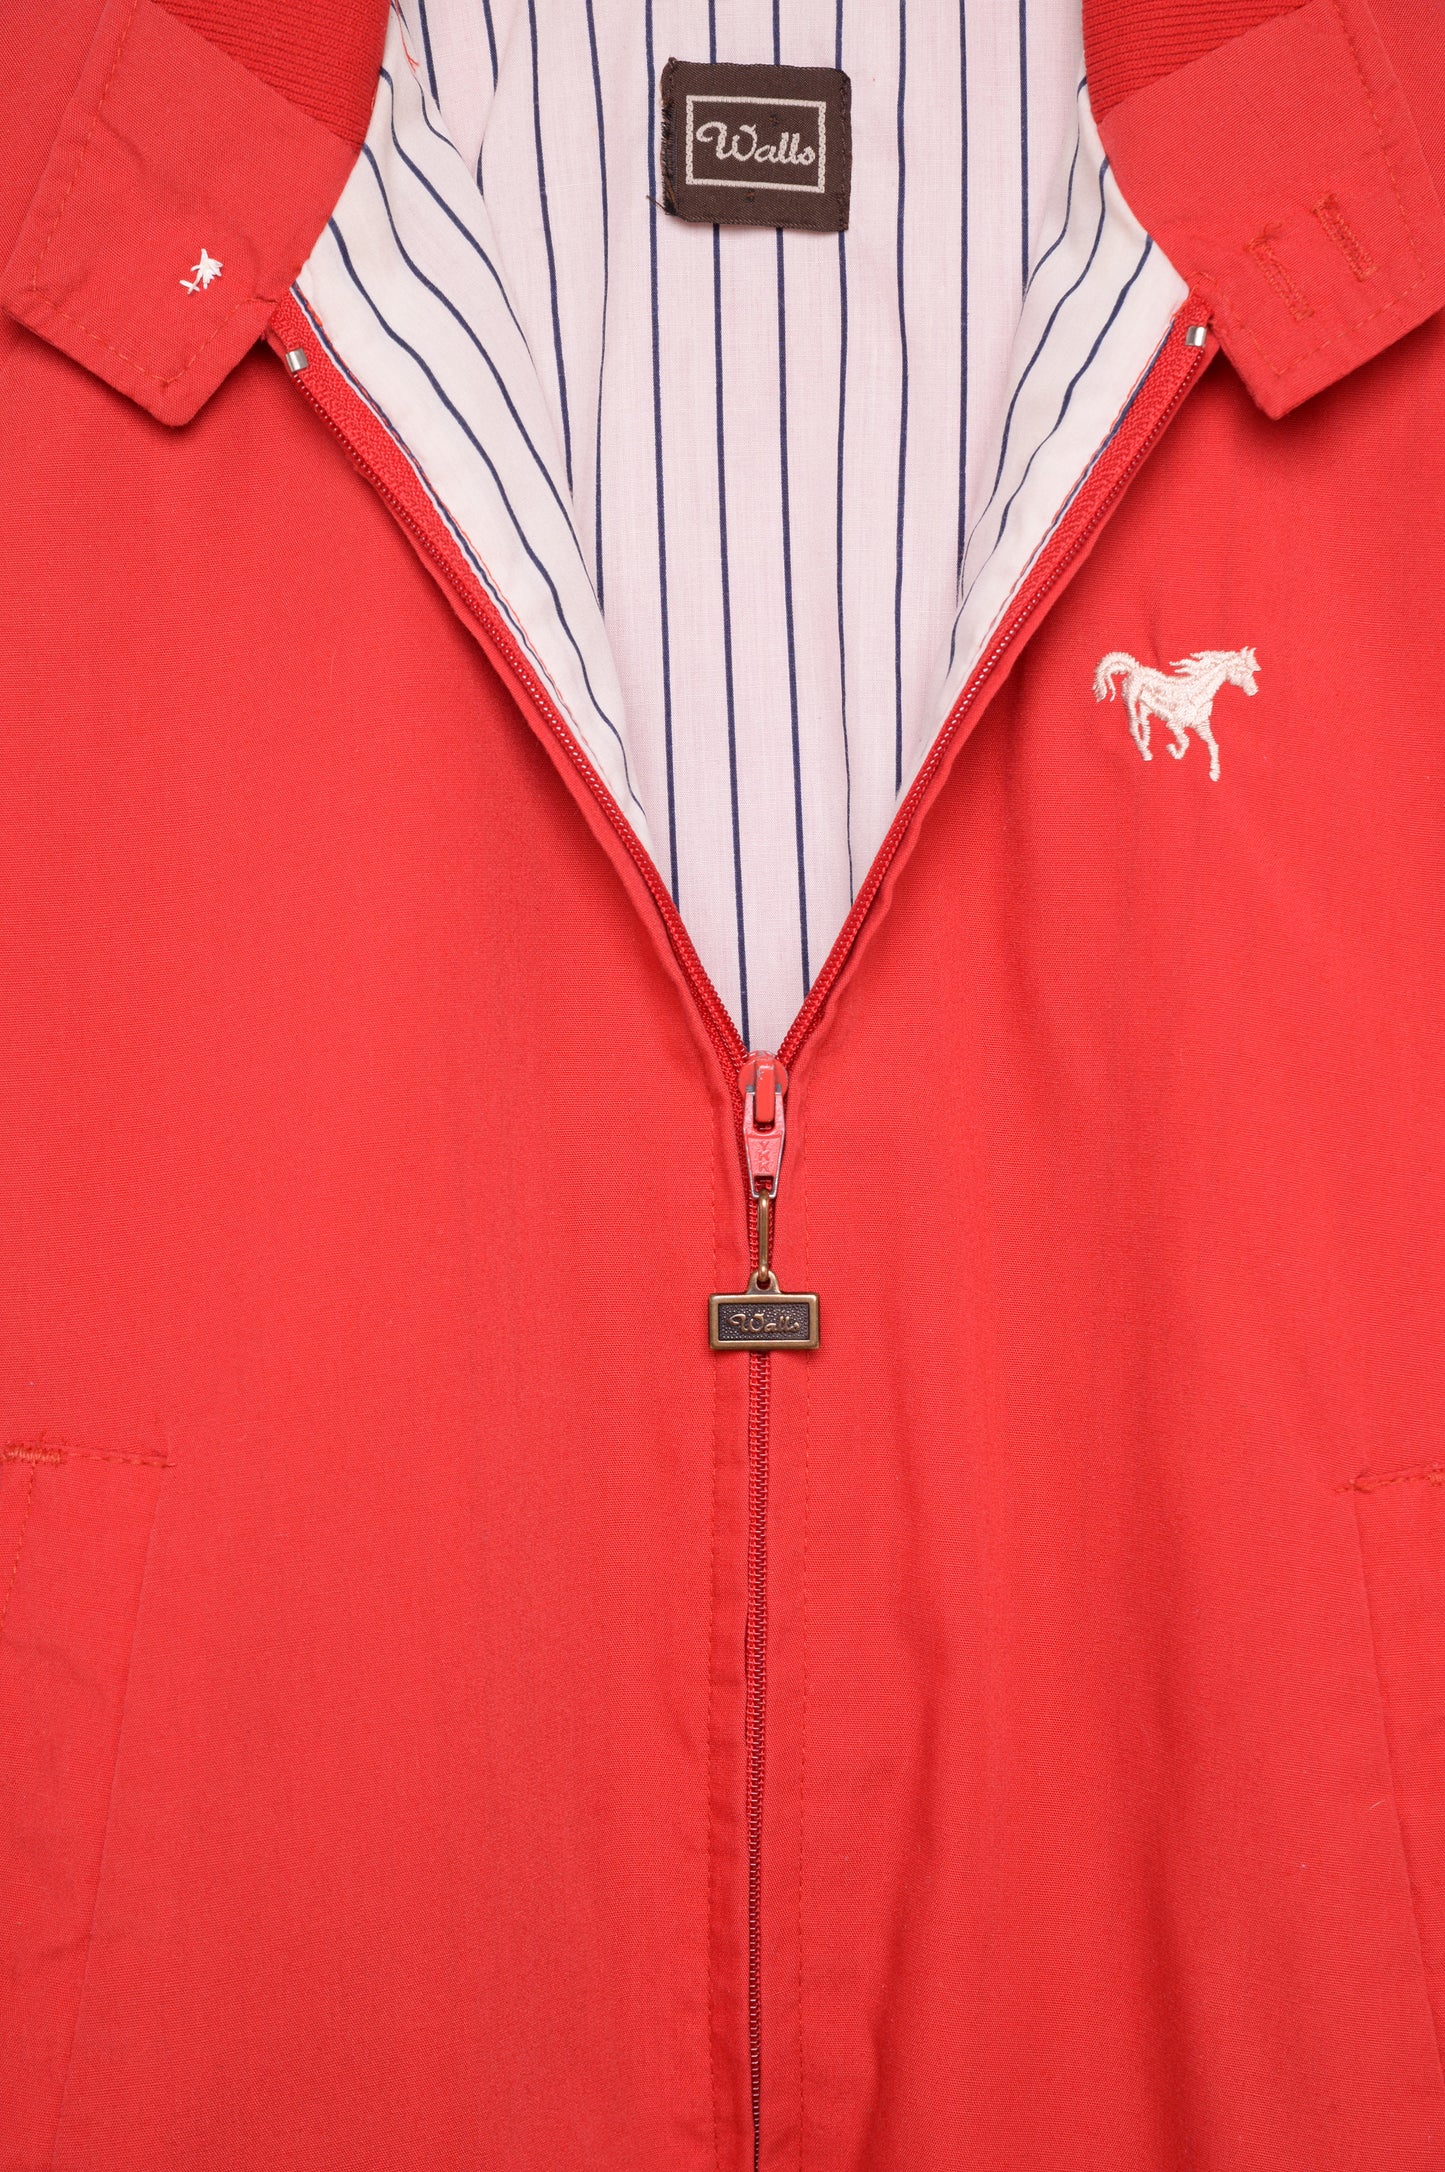 1980s Golf Jacket USA